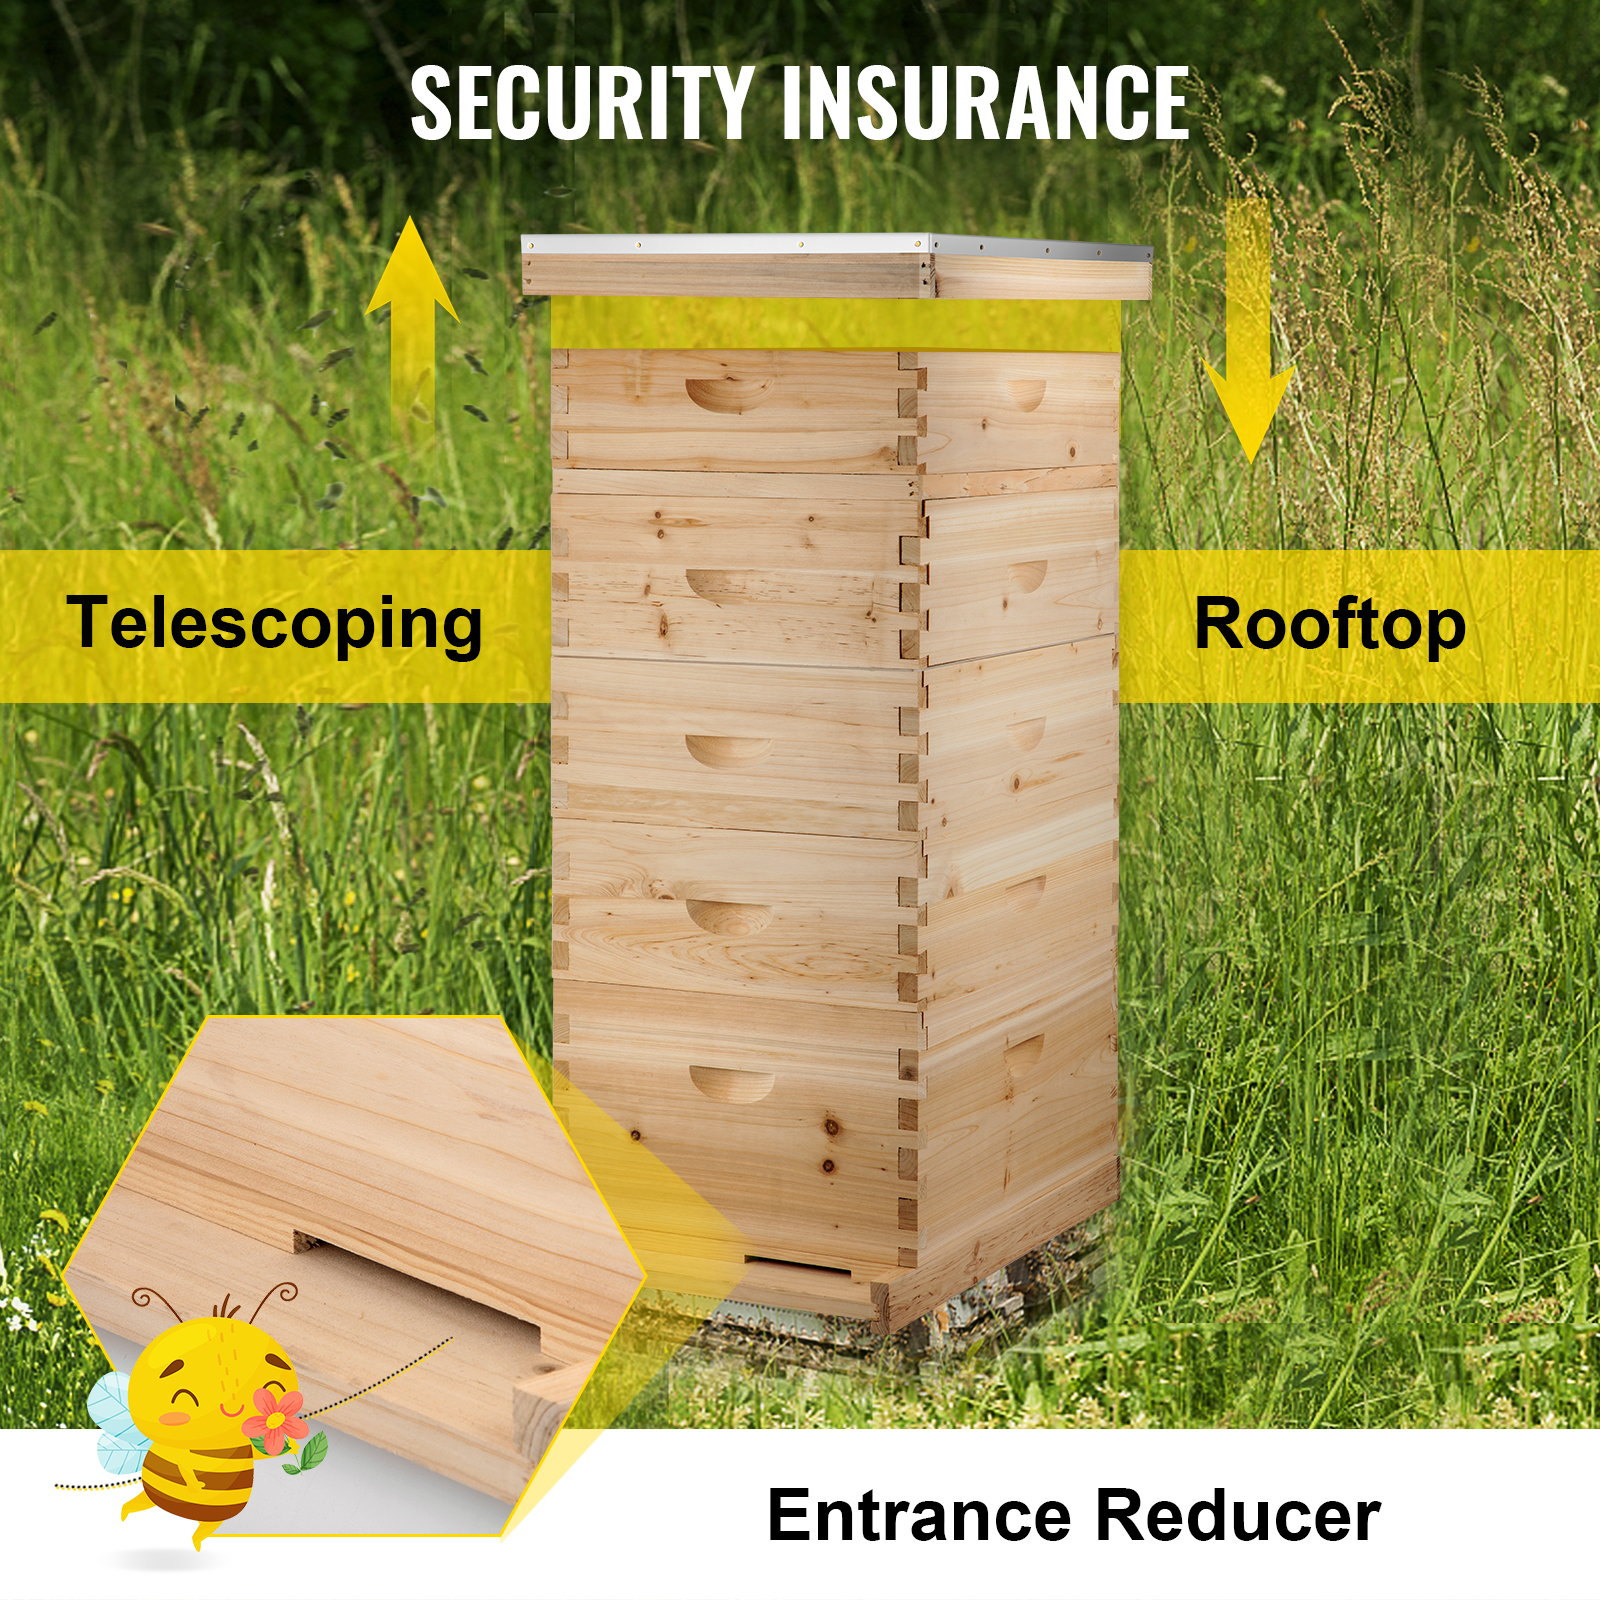 5 Board Box10-Frame Beehive Frames /Bee Hive Frame for Beekeeping w/ Metal Roof 